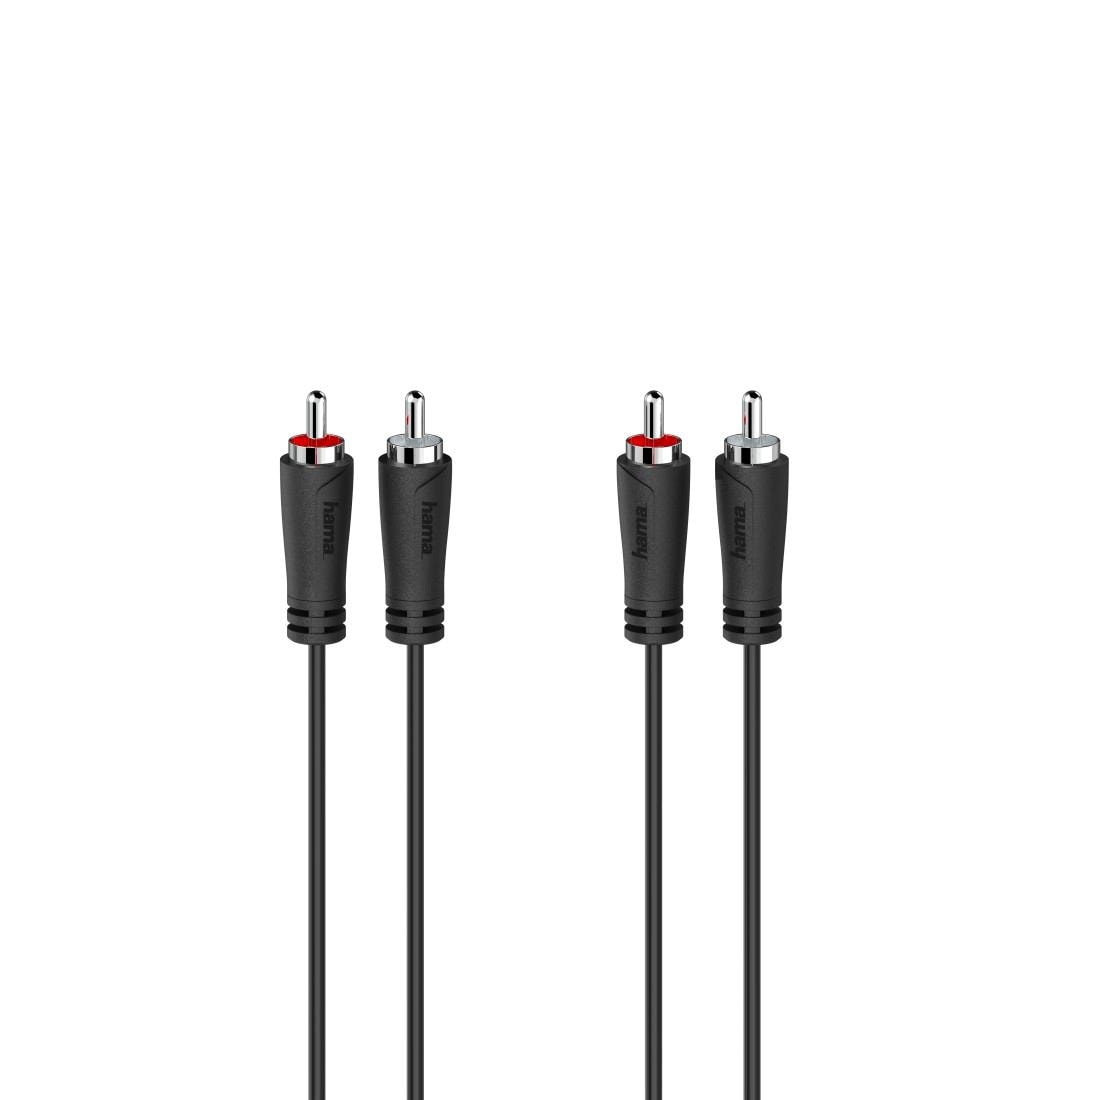 Hama Audio-Kabel »Audio Kabel, 2 Cinch Stecker, 3,0 m«, Cinch, 30 cm